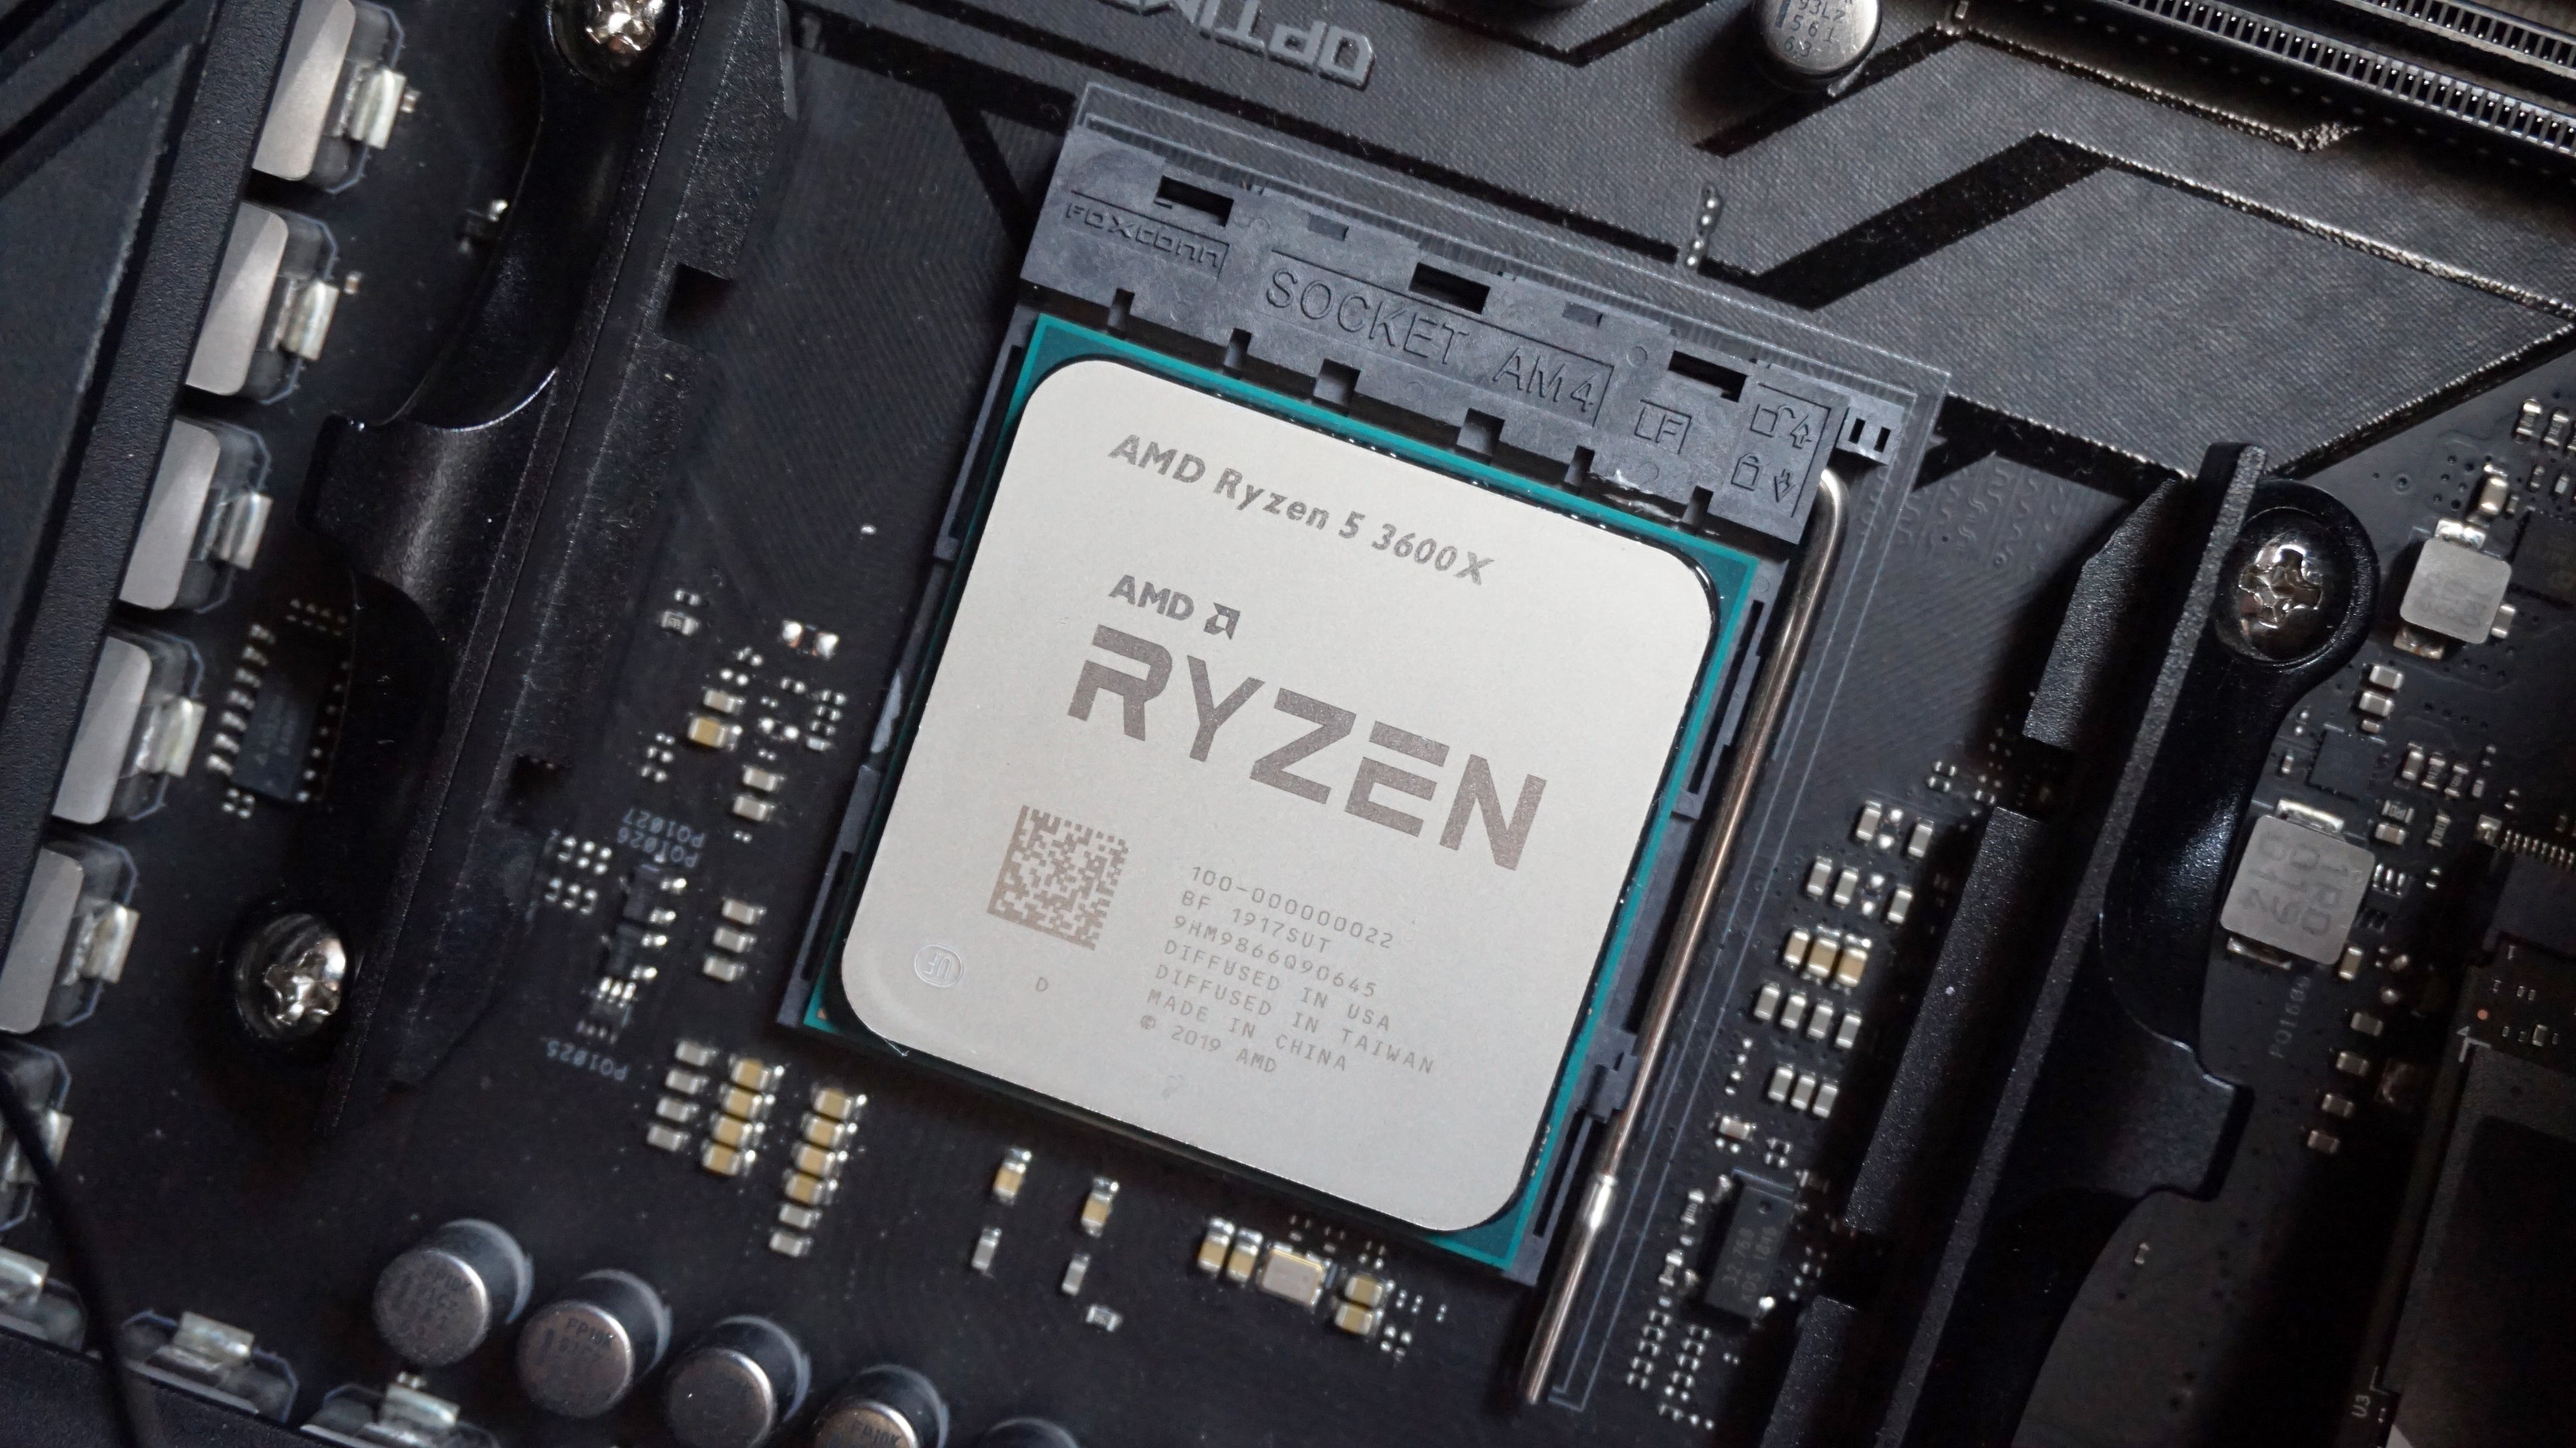 5 3600 сокет. Ryzen 5 3600x. AMD Ryzen 5 3600. Процессор AMD Ryzen 5 3600x OEM. AMD Ryzen 5 3600 am4, 6 x 3600 МГЦ.